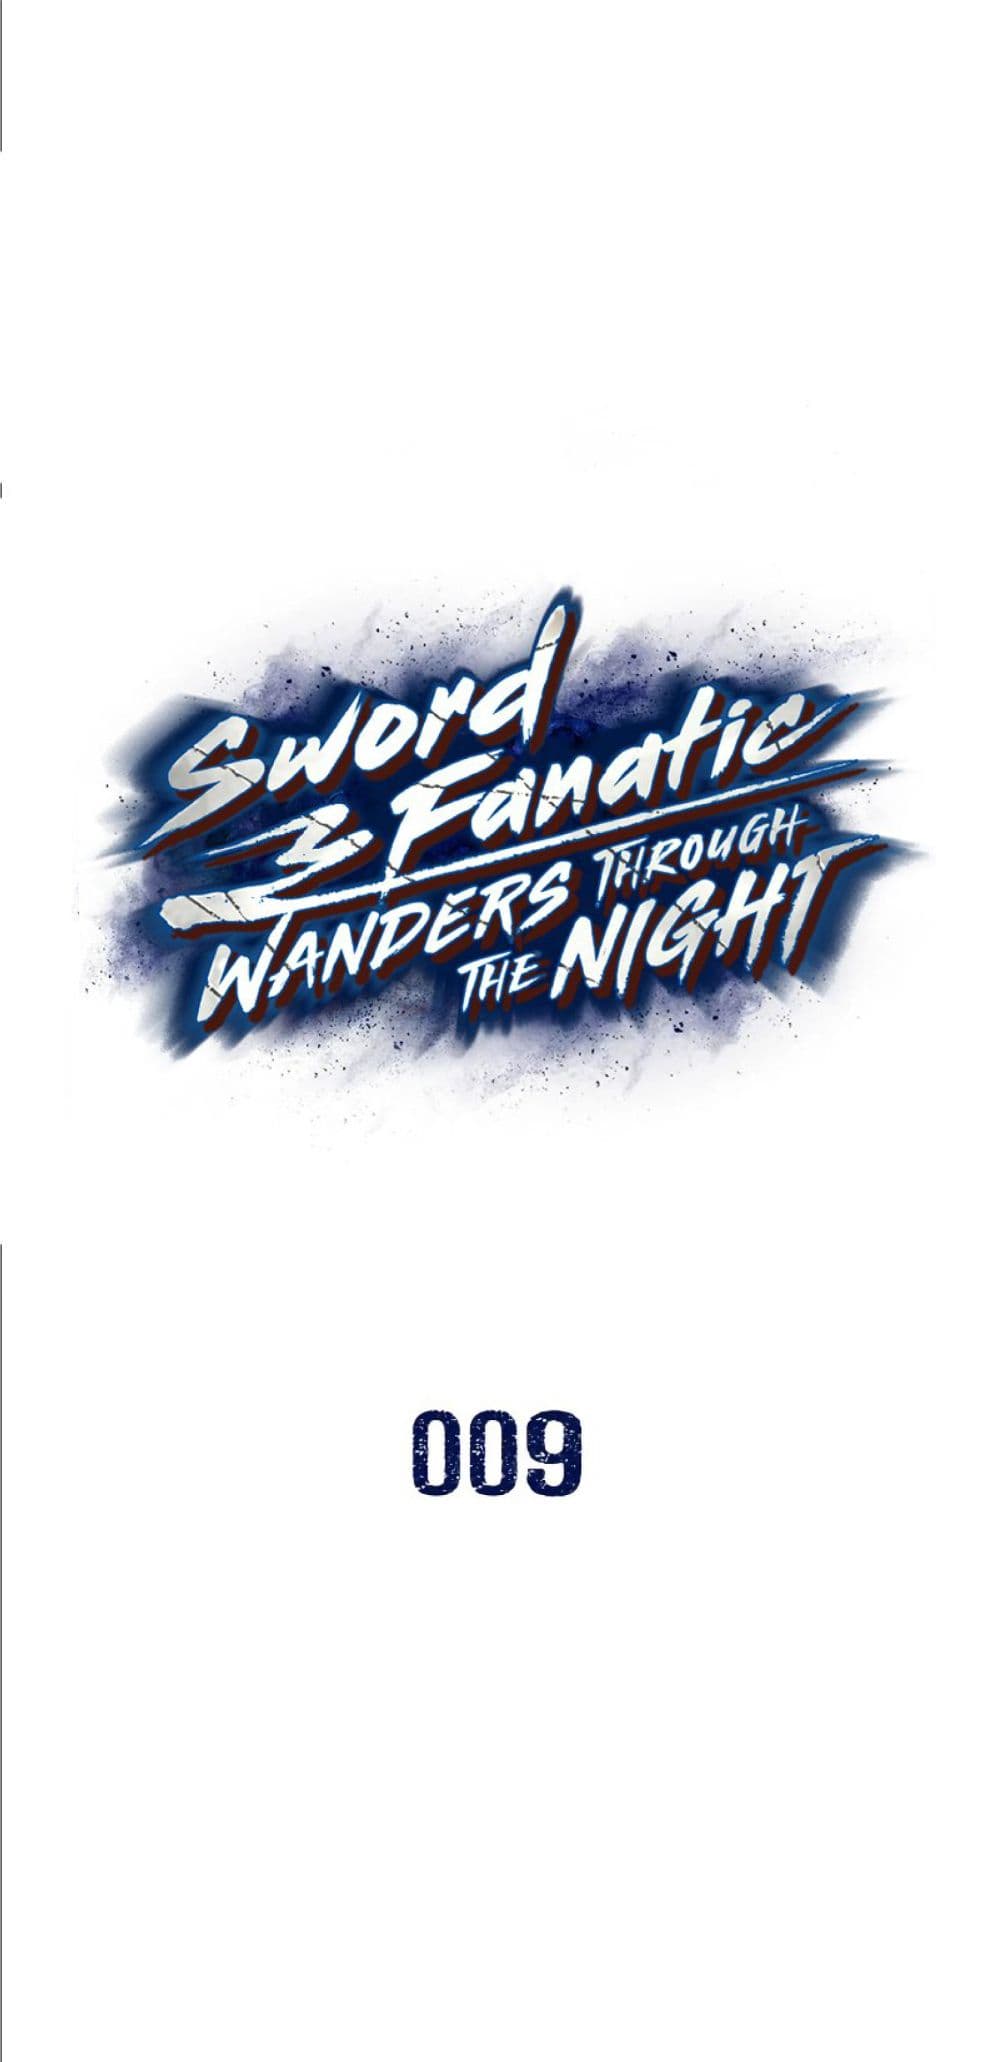 Sword Fanatic Wanders Through The Night 9-9